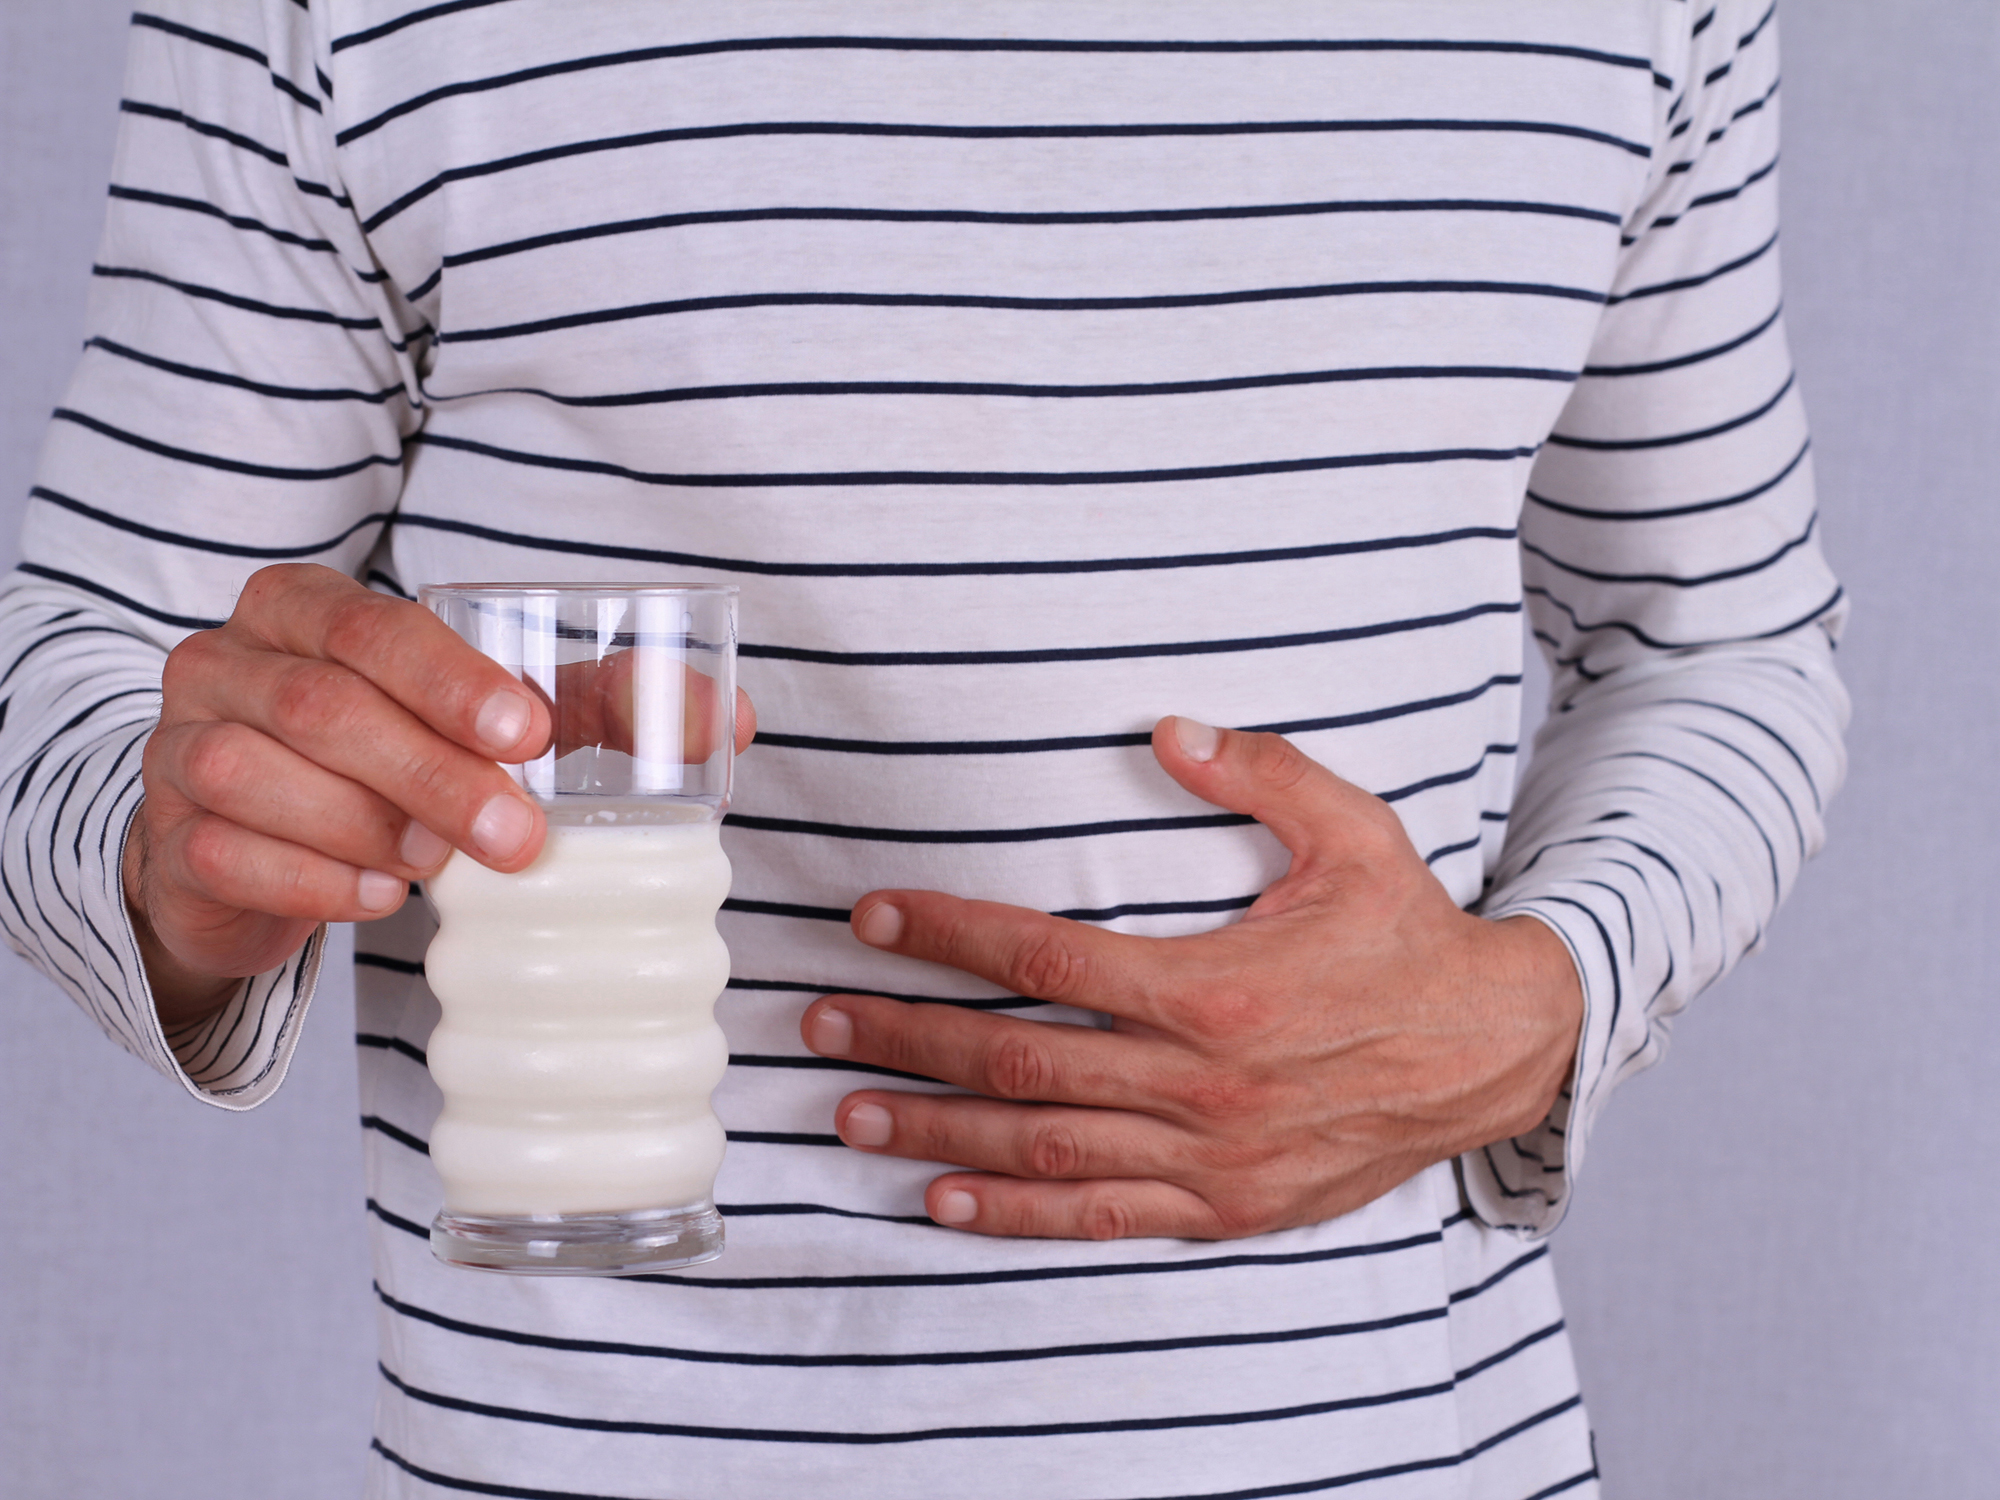 Can prebiotics cure your lactose intolerance?